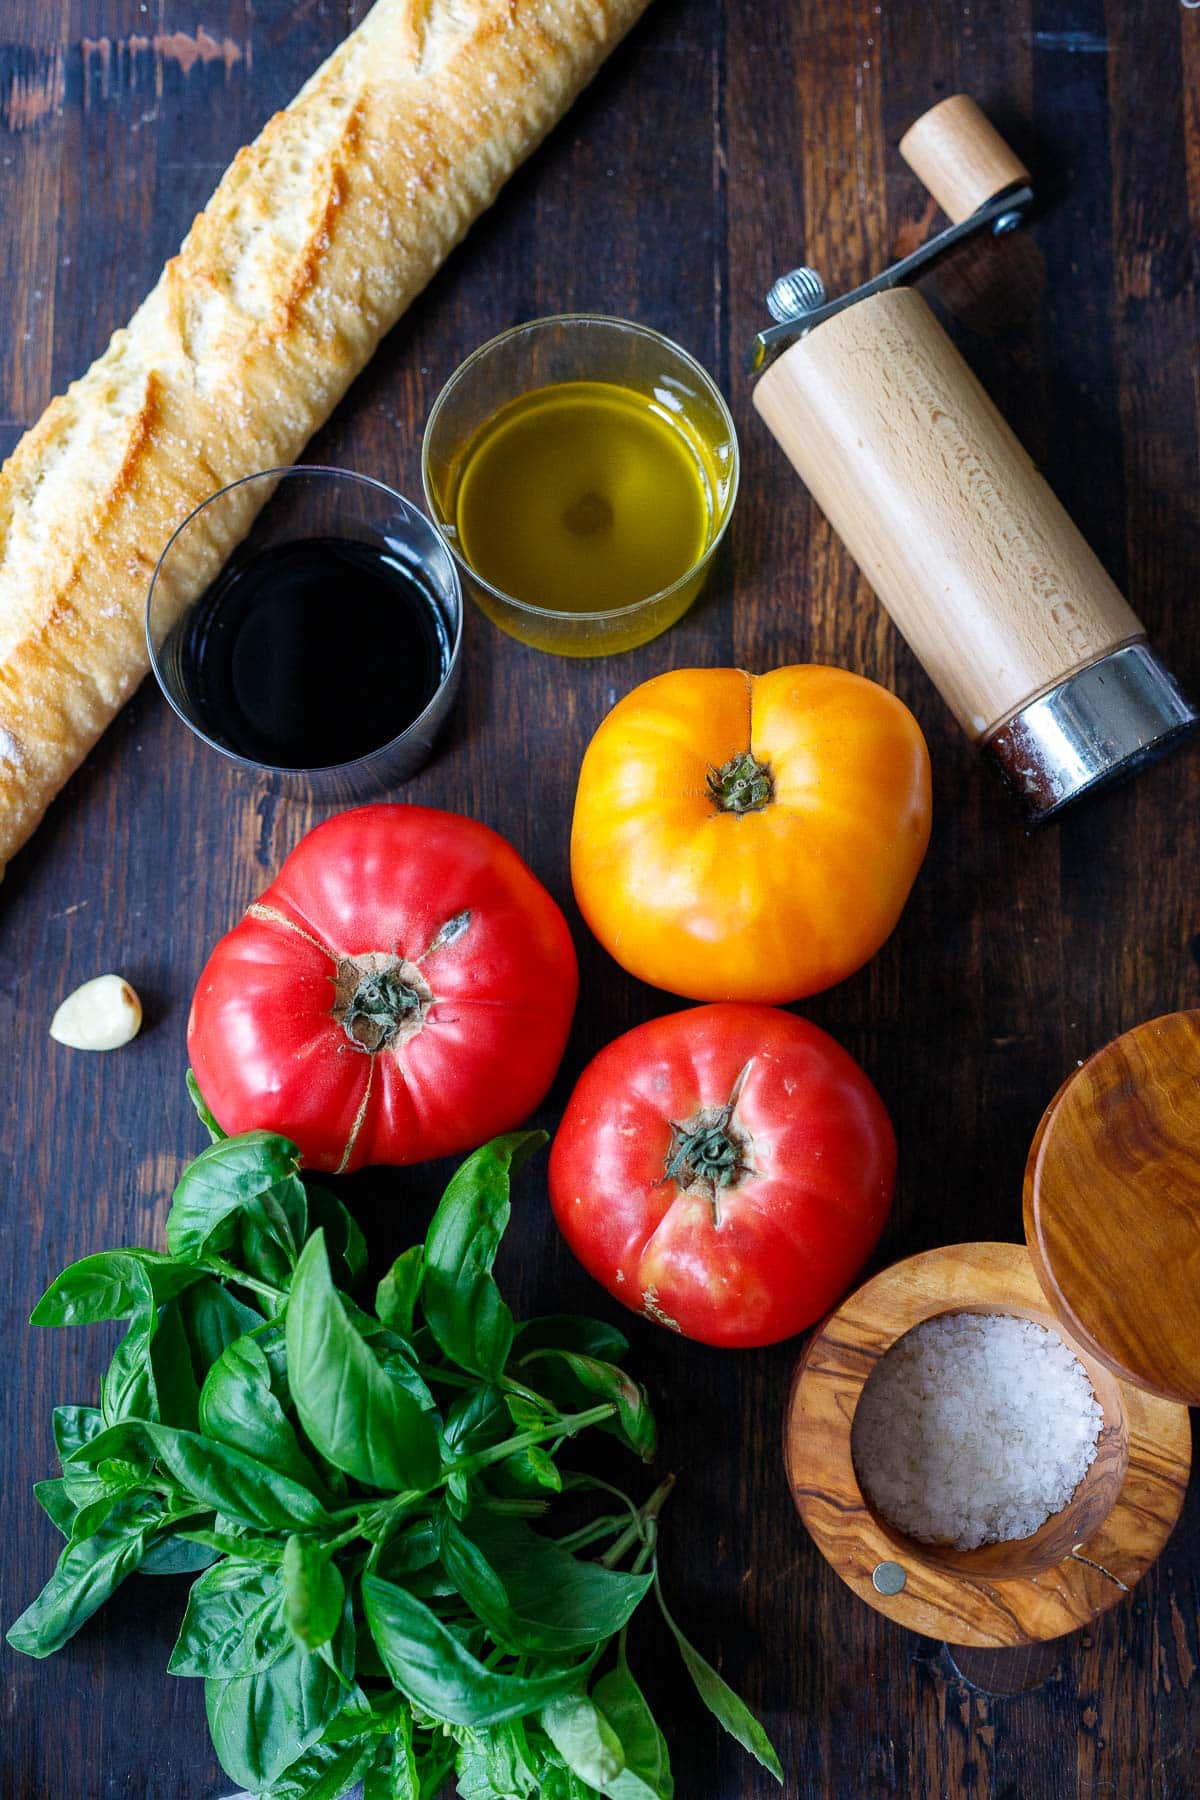 Tomato Bruschetta ingredients on table, heirloom tomatoes, fresh basil, oil and vinegar